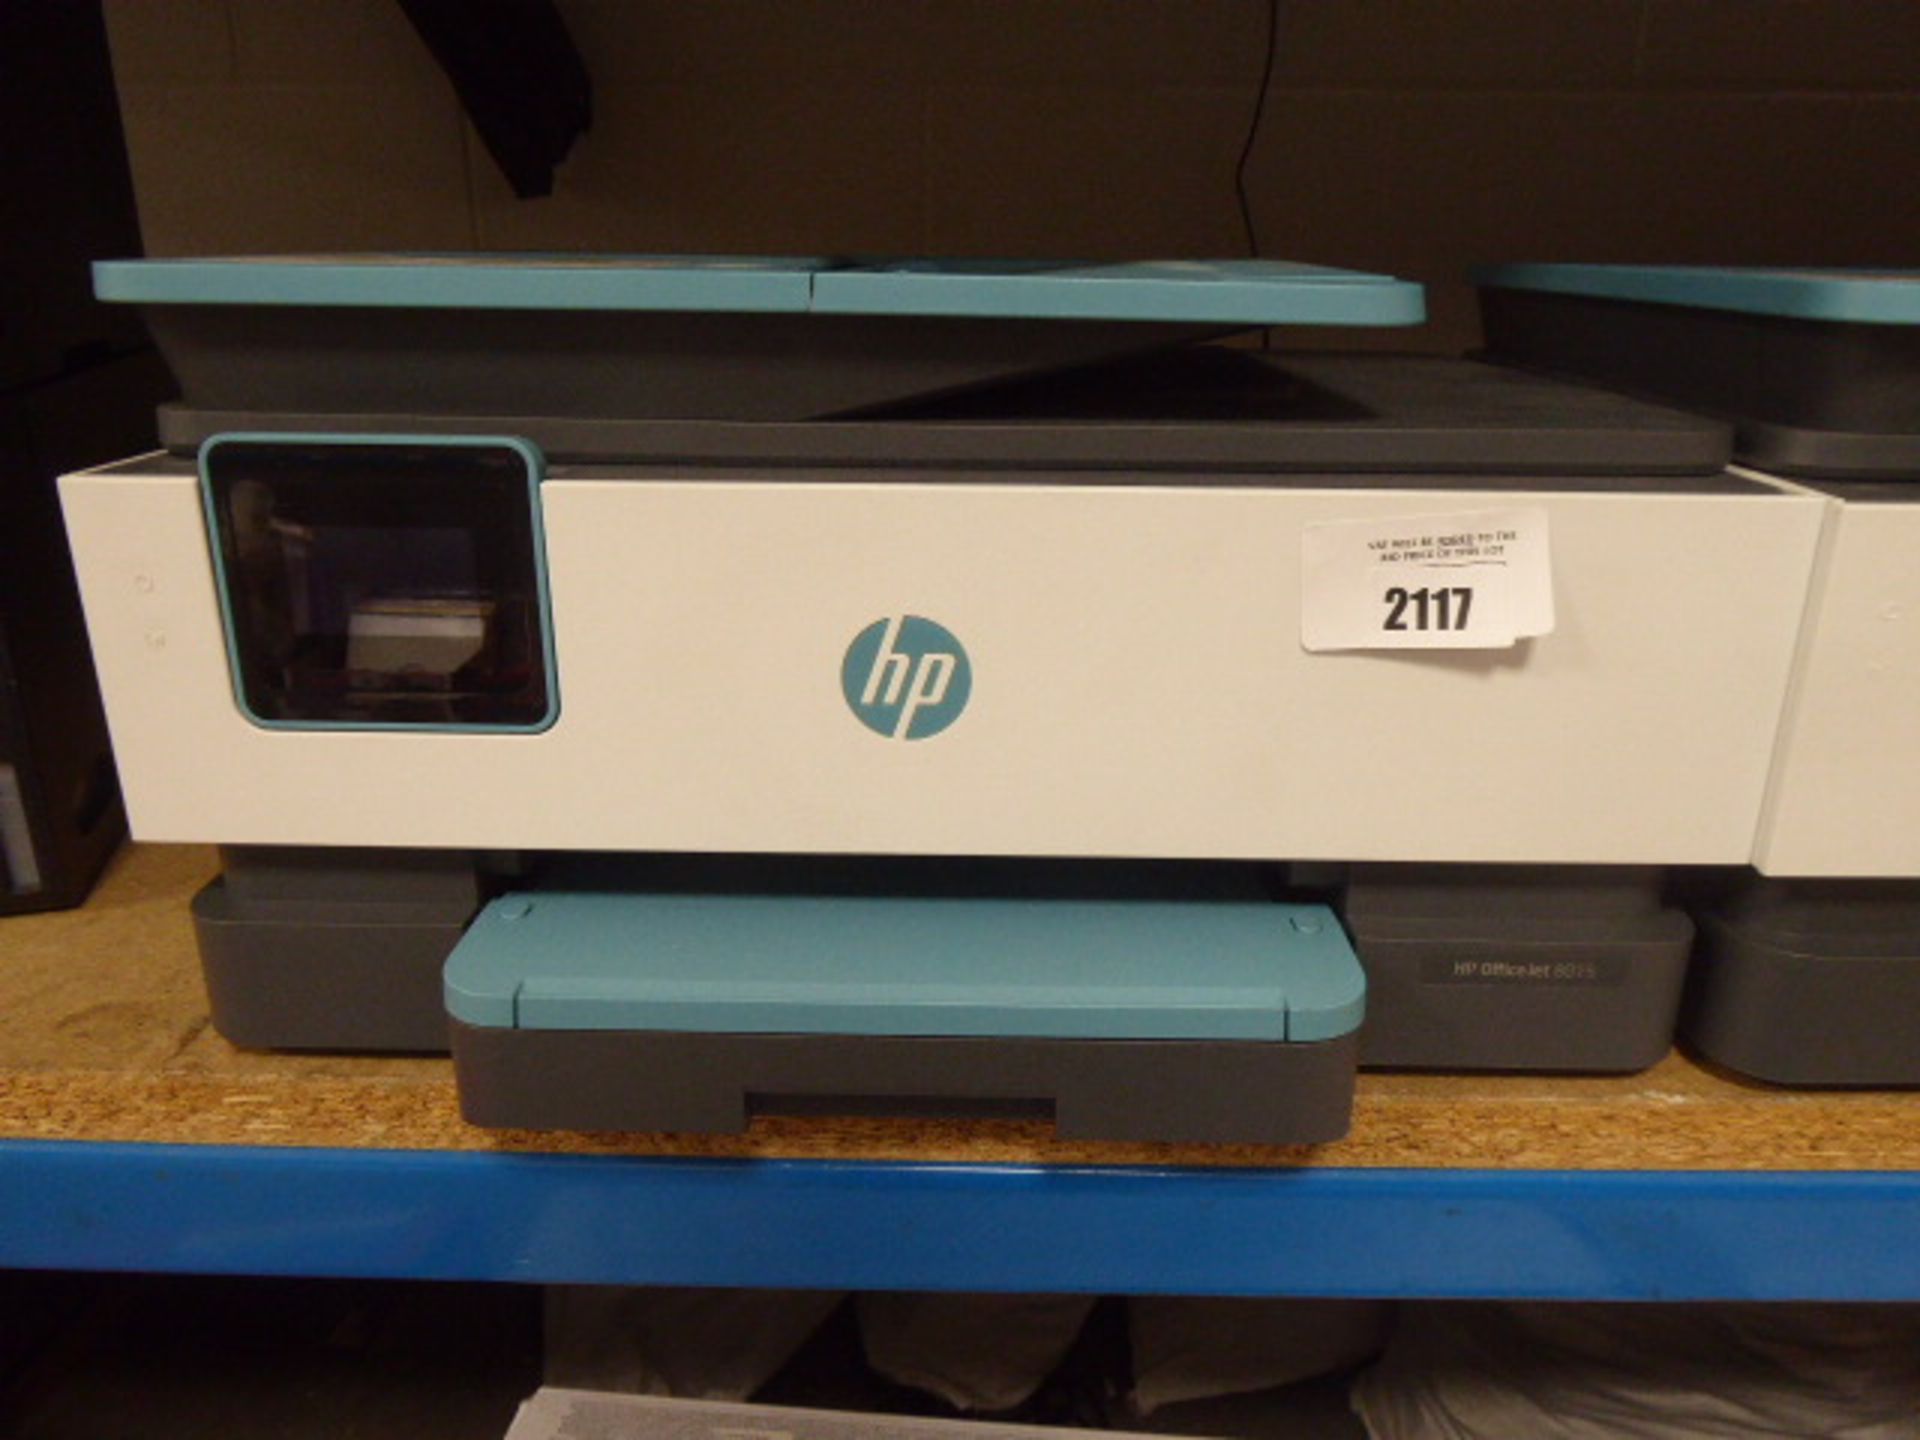 HP Officejet 8015 printer